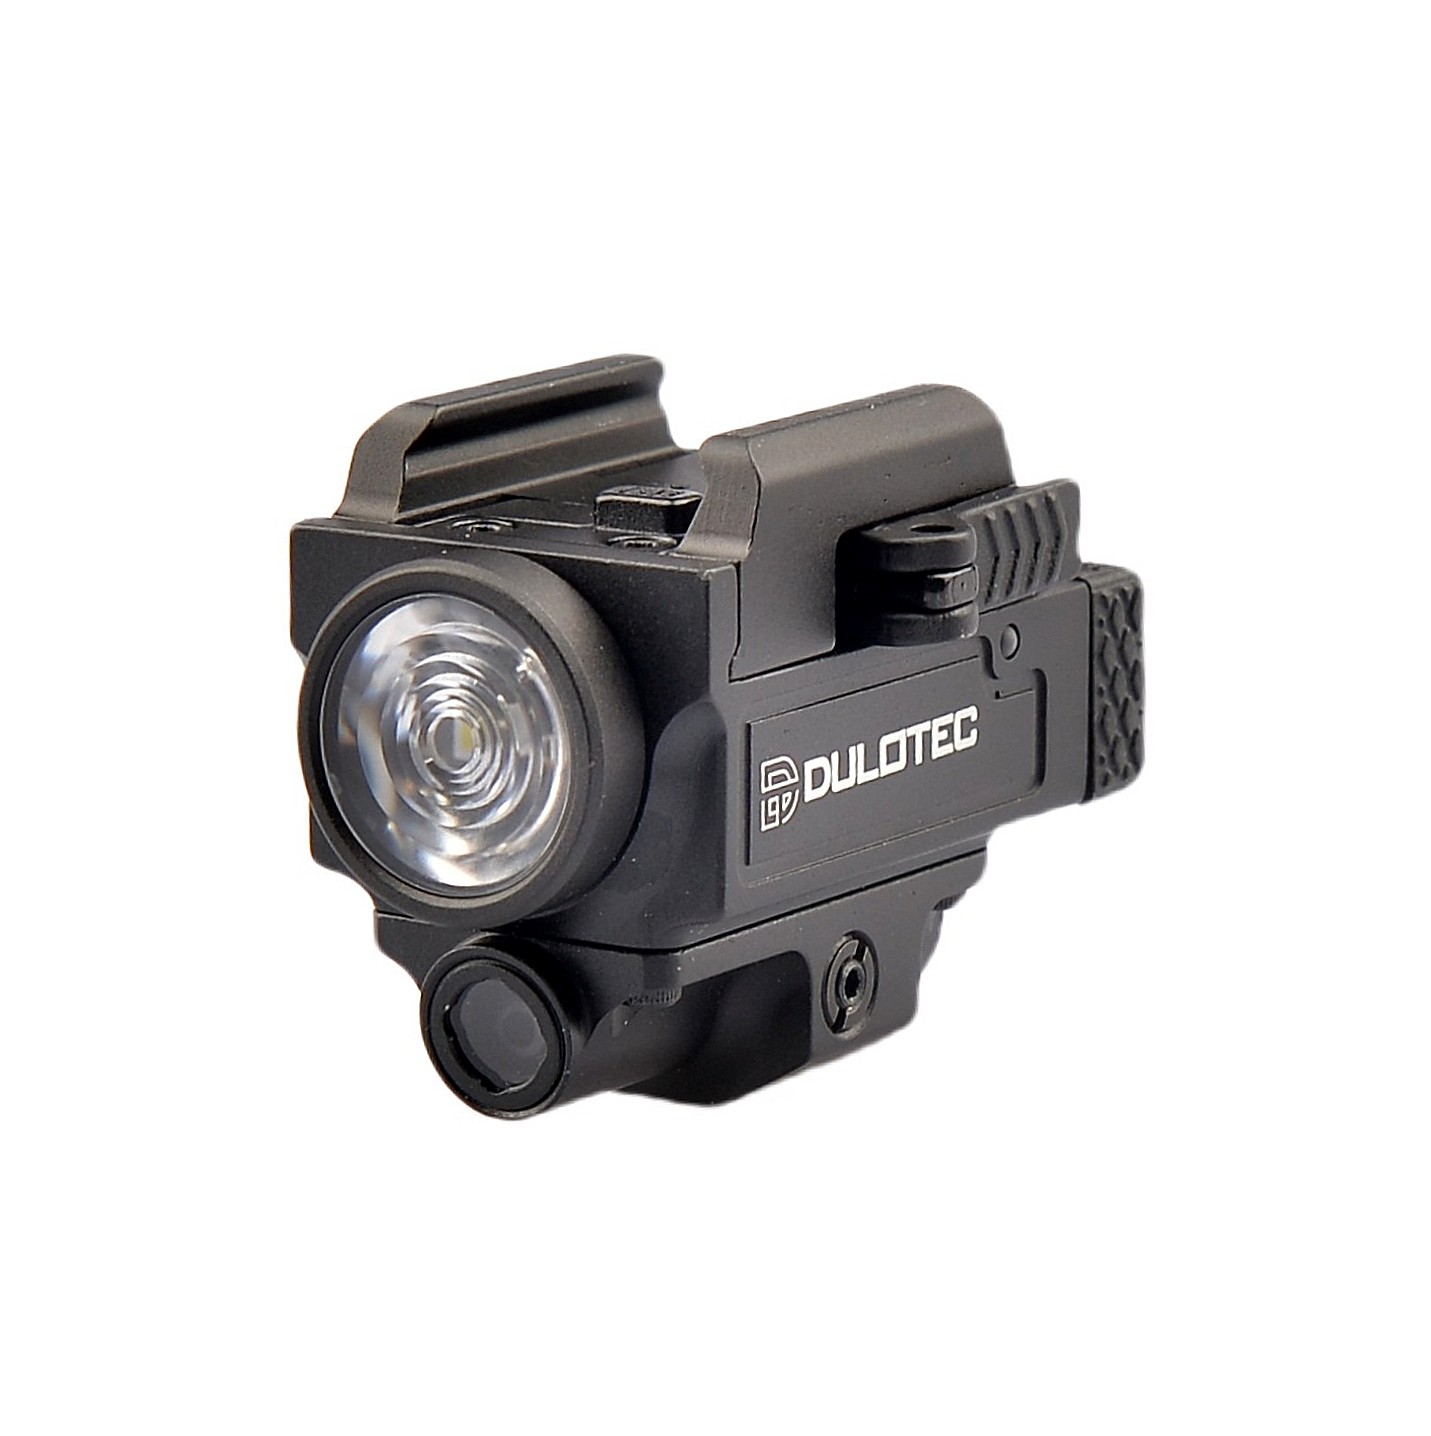 Gun flashlight DULOTEC G4 - sub-target with laser pointer